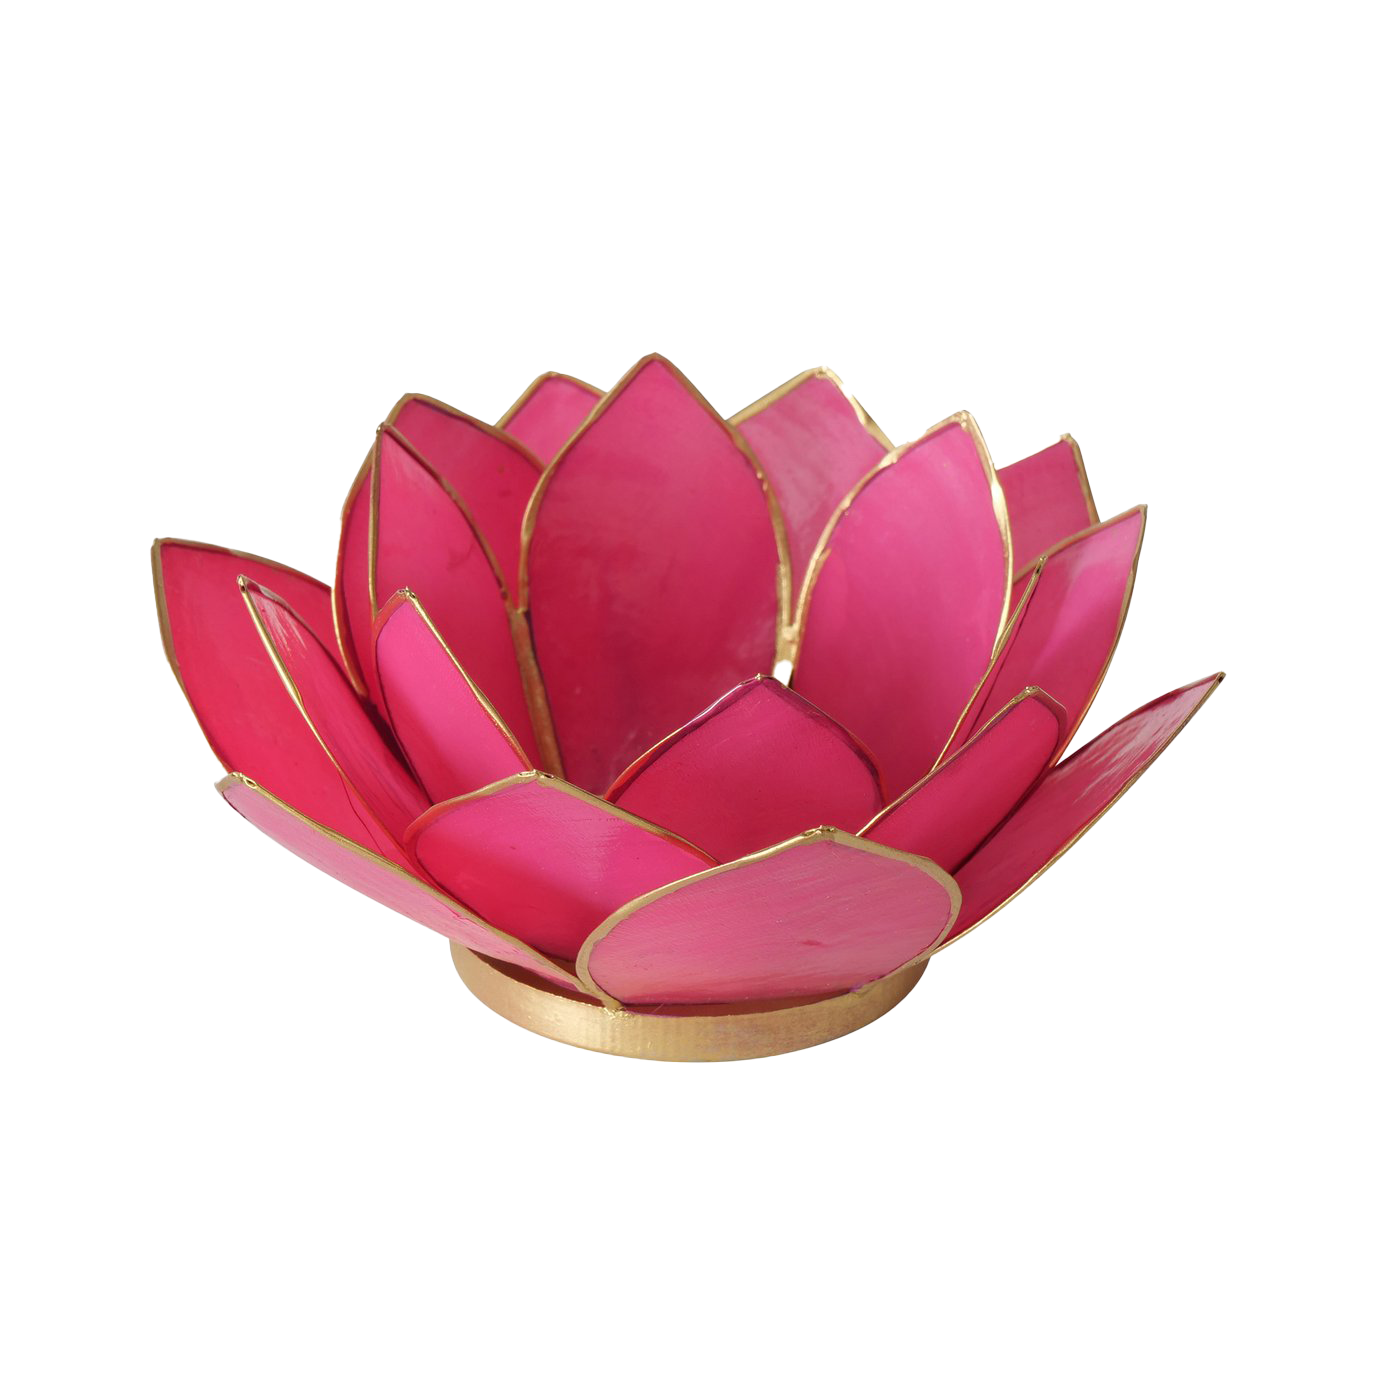 Lotusbloem waxinelichthouder bright pink